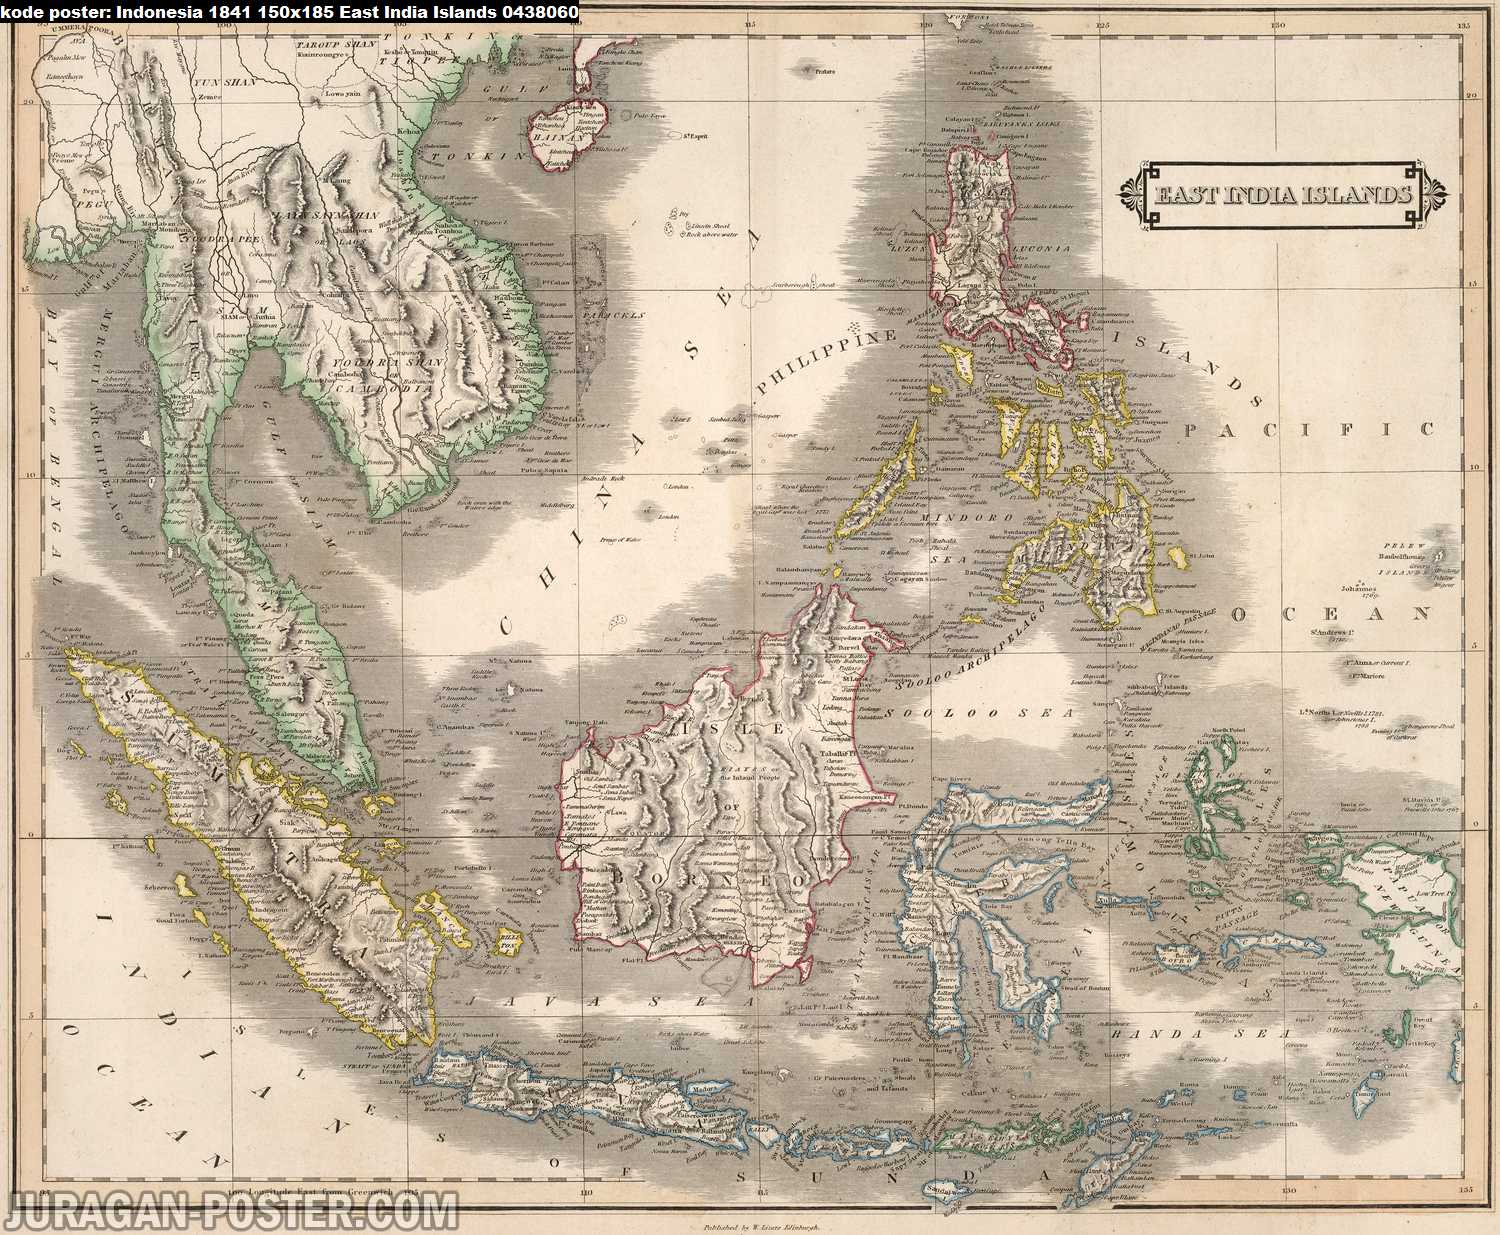 peta indonesia kuno tahun 1841